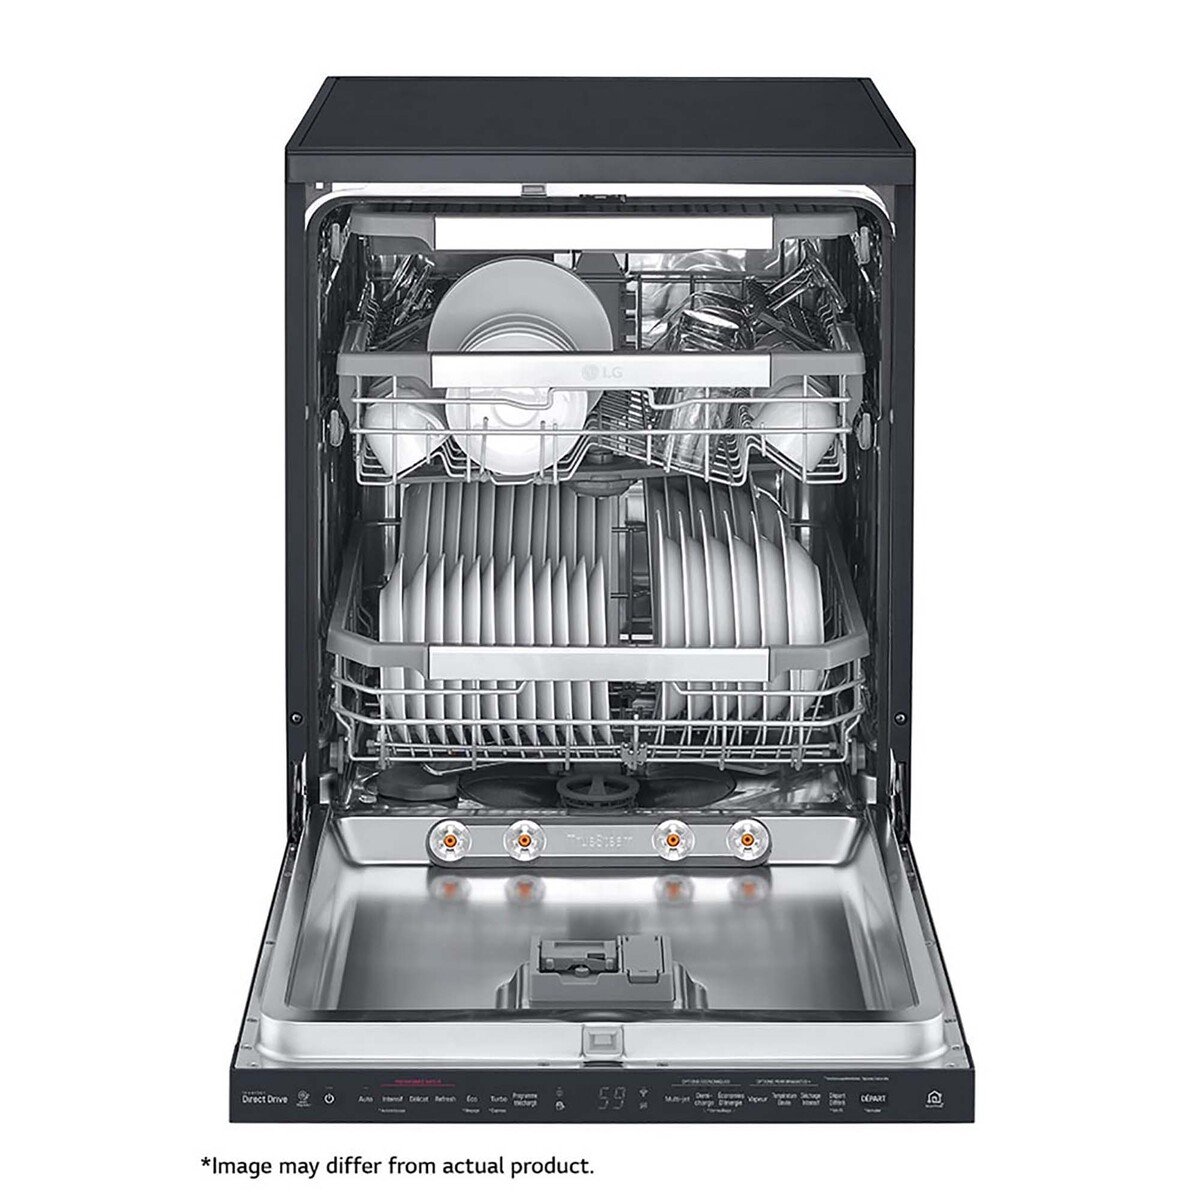 LG Dishwasher DFB325HM 10 Programs